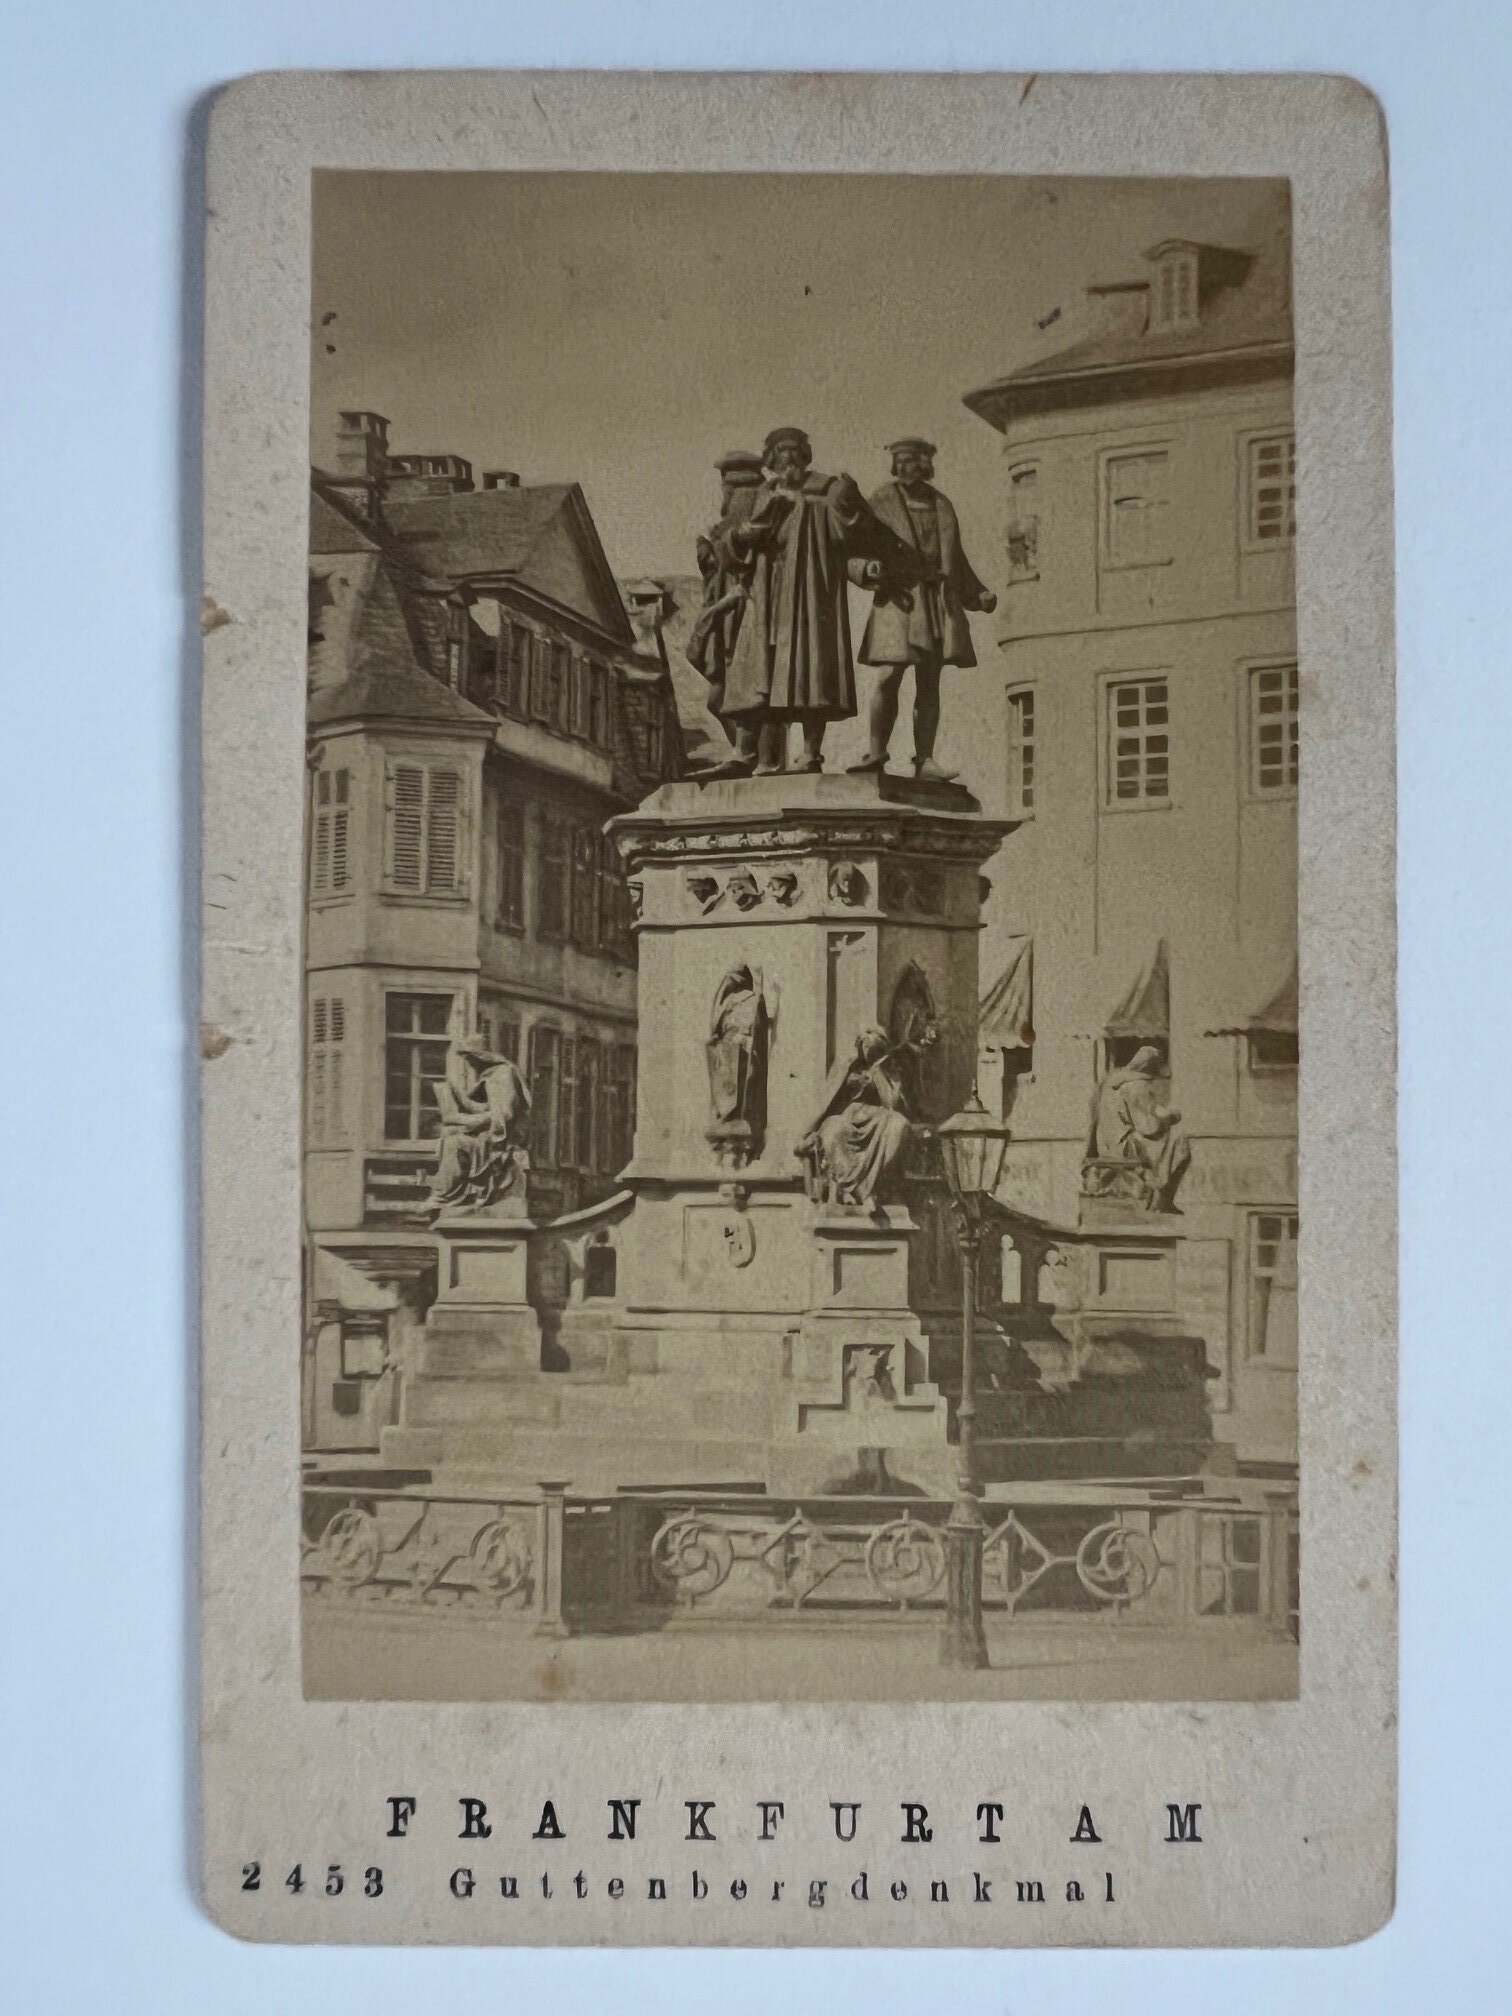 CdV, Unbekannter Fotograf, Frankfurt, Guttenbergdenkmal, ca. 1876. (Taunus-Rhein-Main - Regionalgeschichtliche Sammlung Dr. Stefan Naas CC BY-NC-SA)